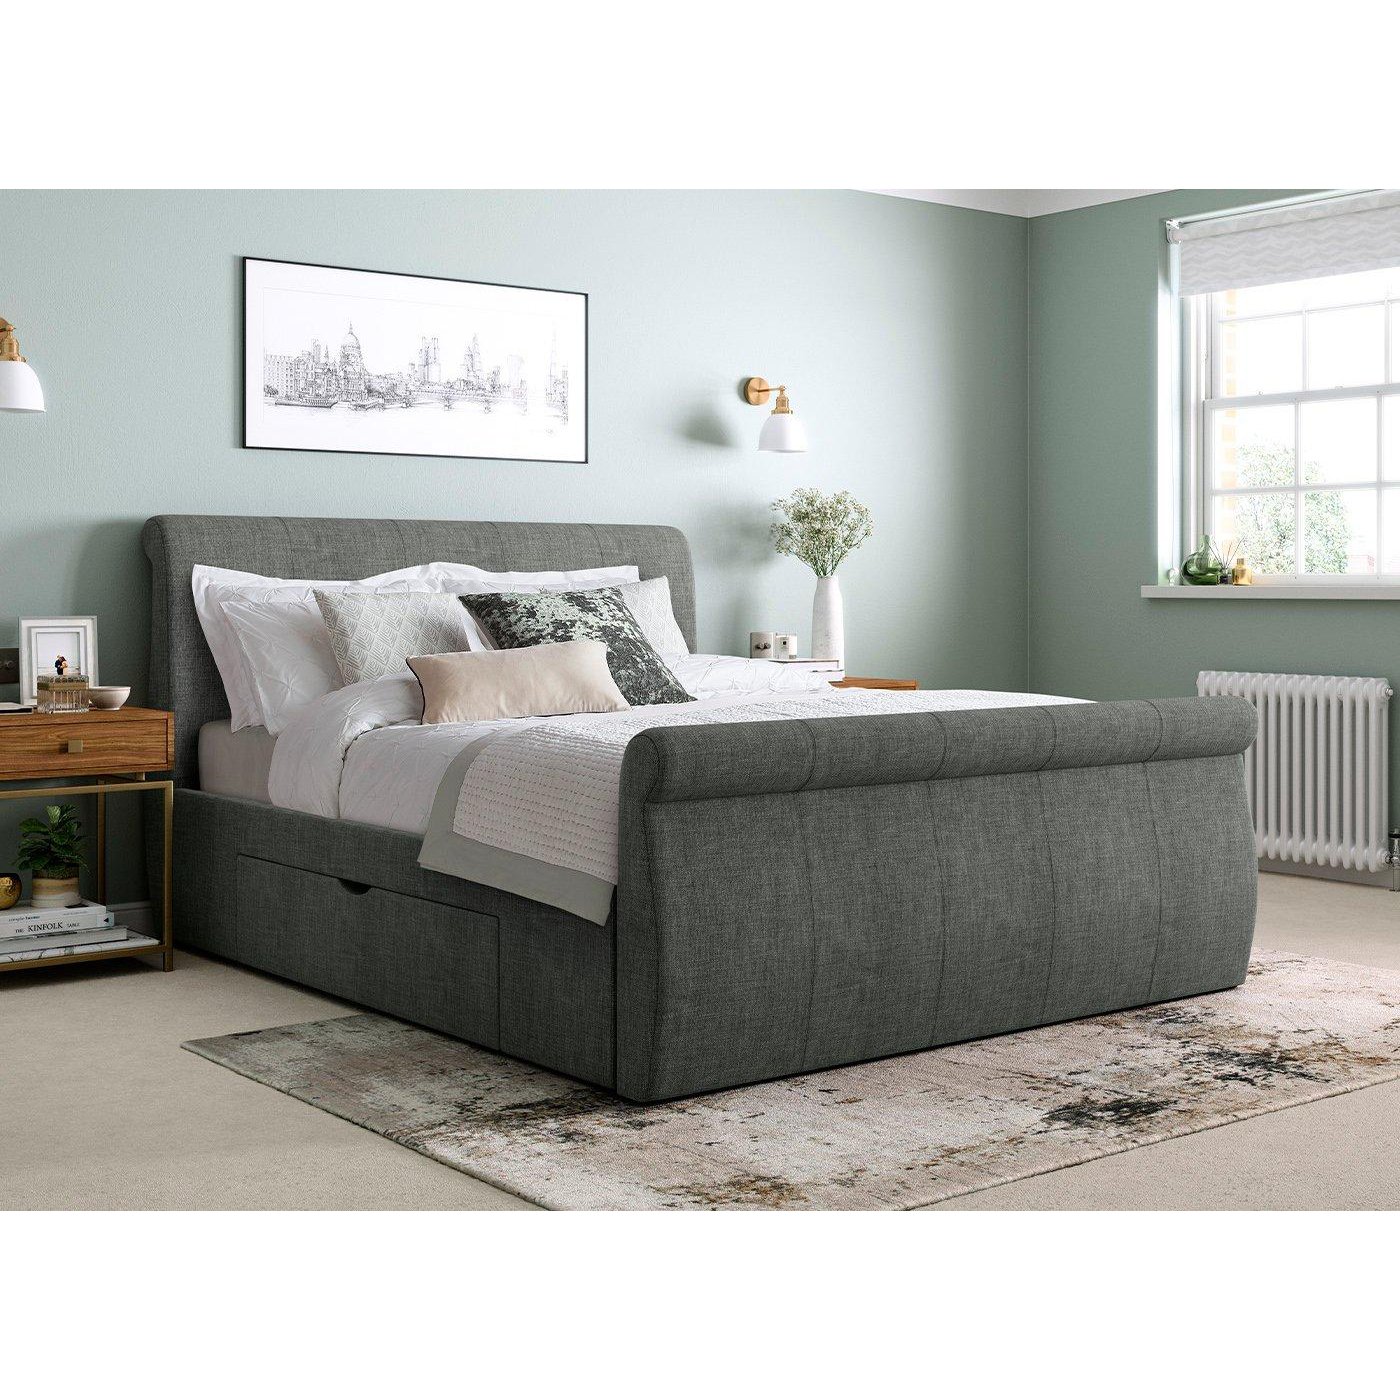 Lucia Upholstered Bed Frame - 3'0 Single - Grey